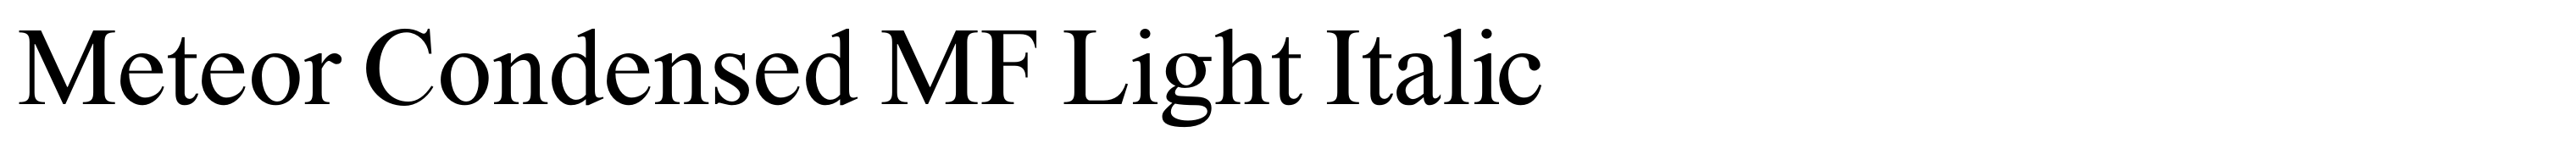 Meteor Condensed MF Light Italic